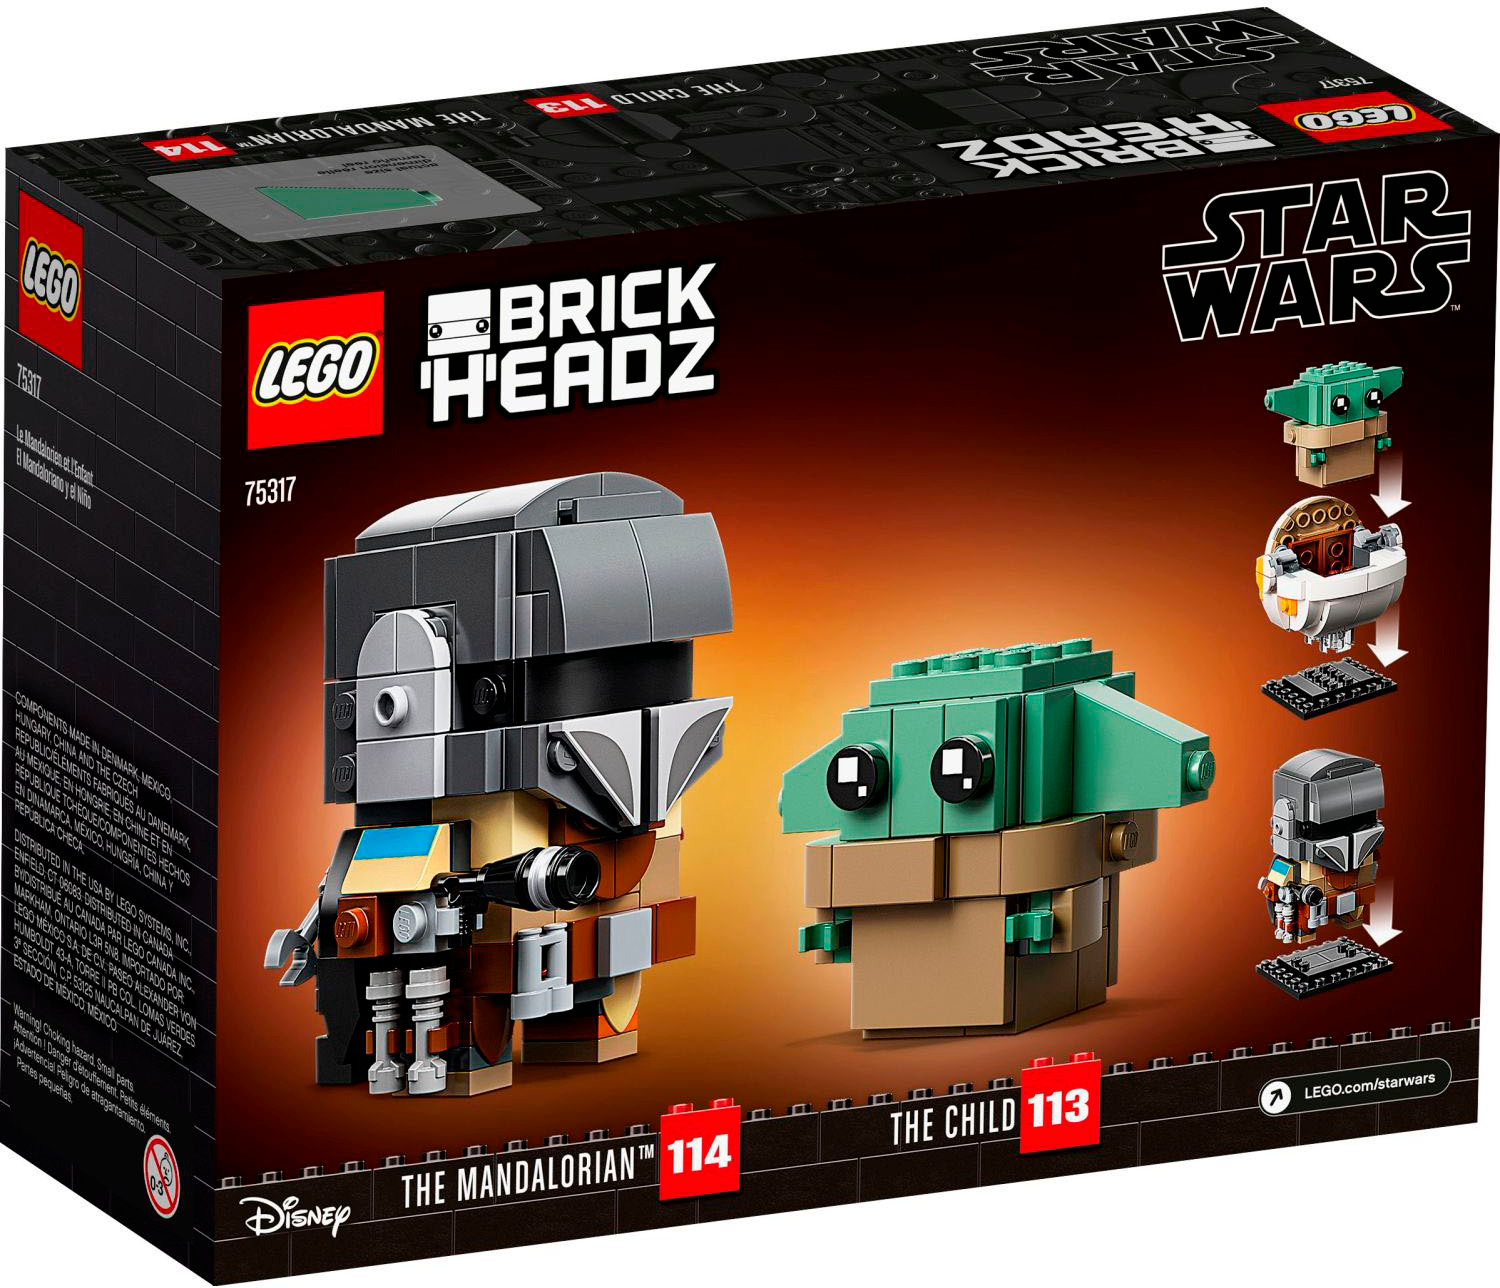 Pak at lægge spion Jakke LEGO BrickHeadz Star Wars The Mandalorian & The Child 75317 Toy Building  Kit (295 Pieces) 6329441 - Best Buy